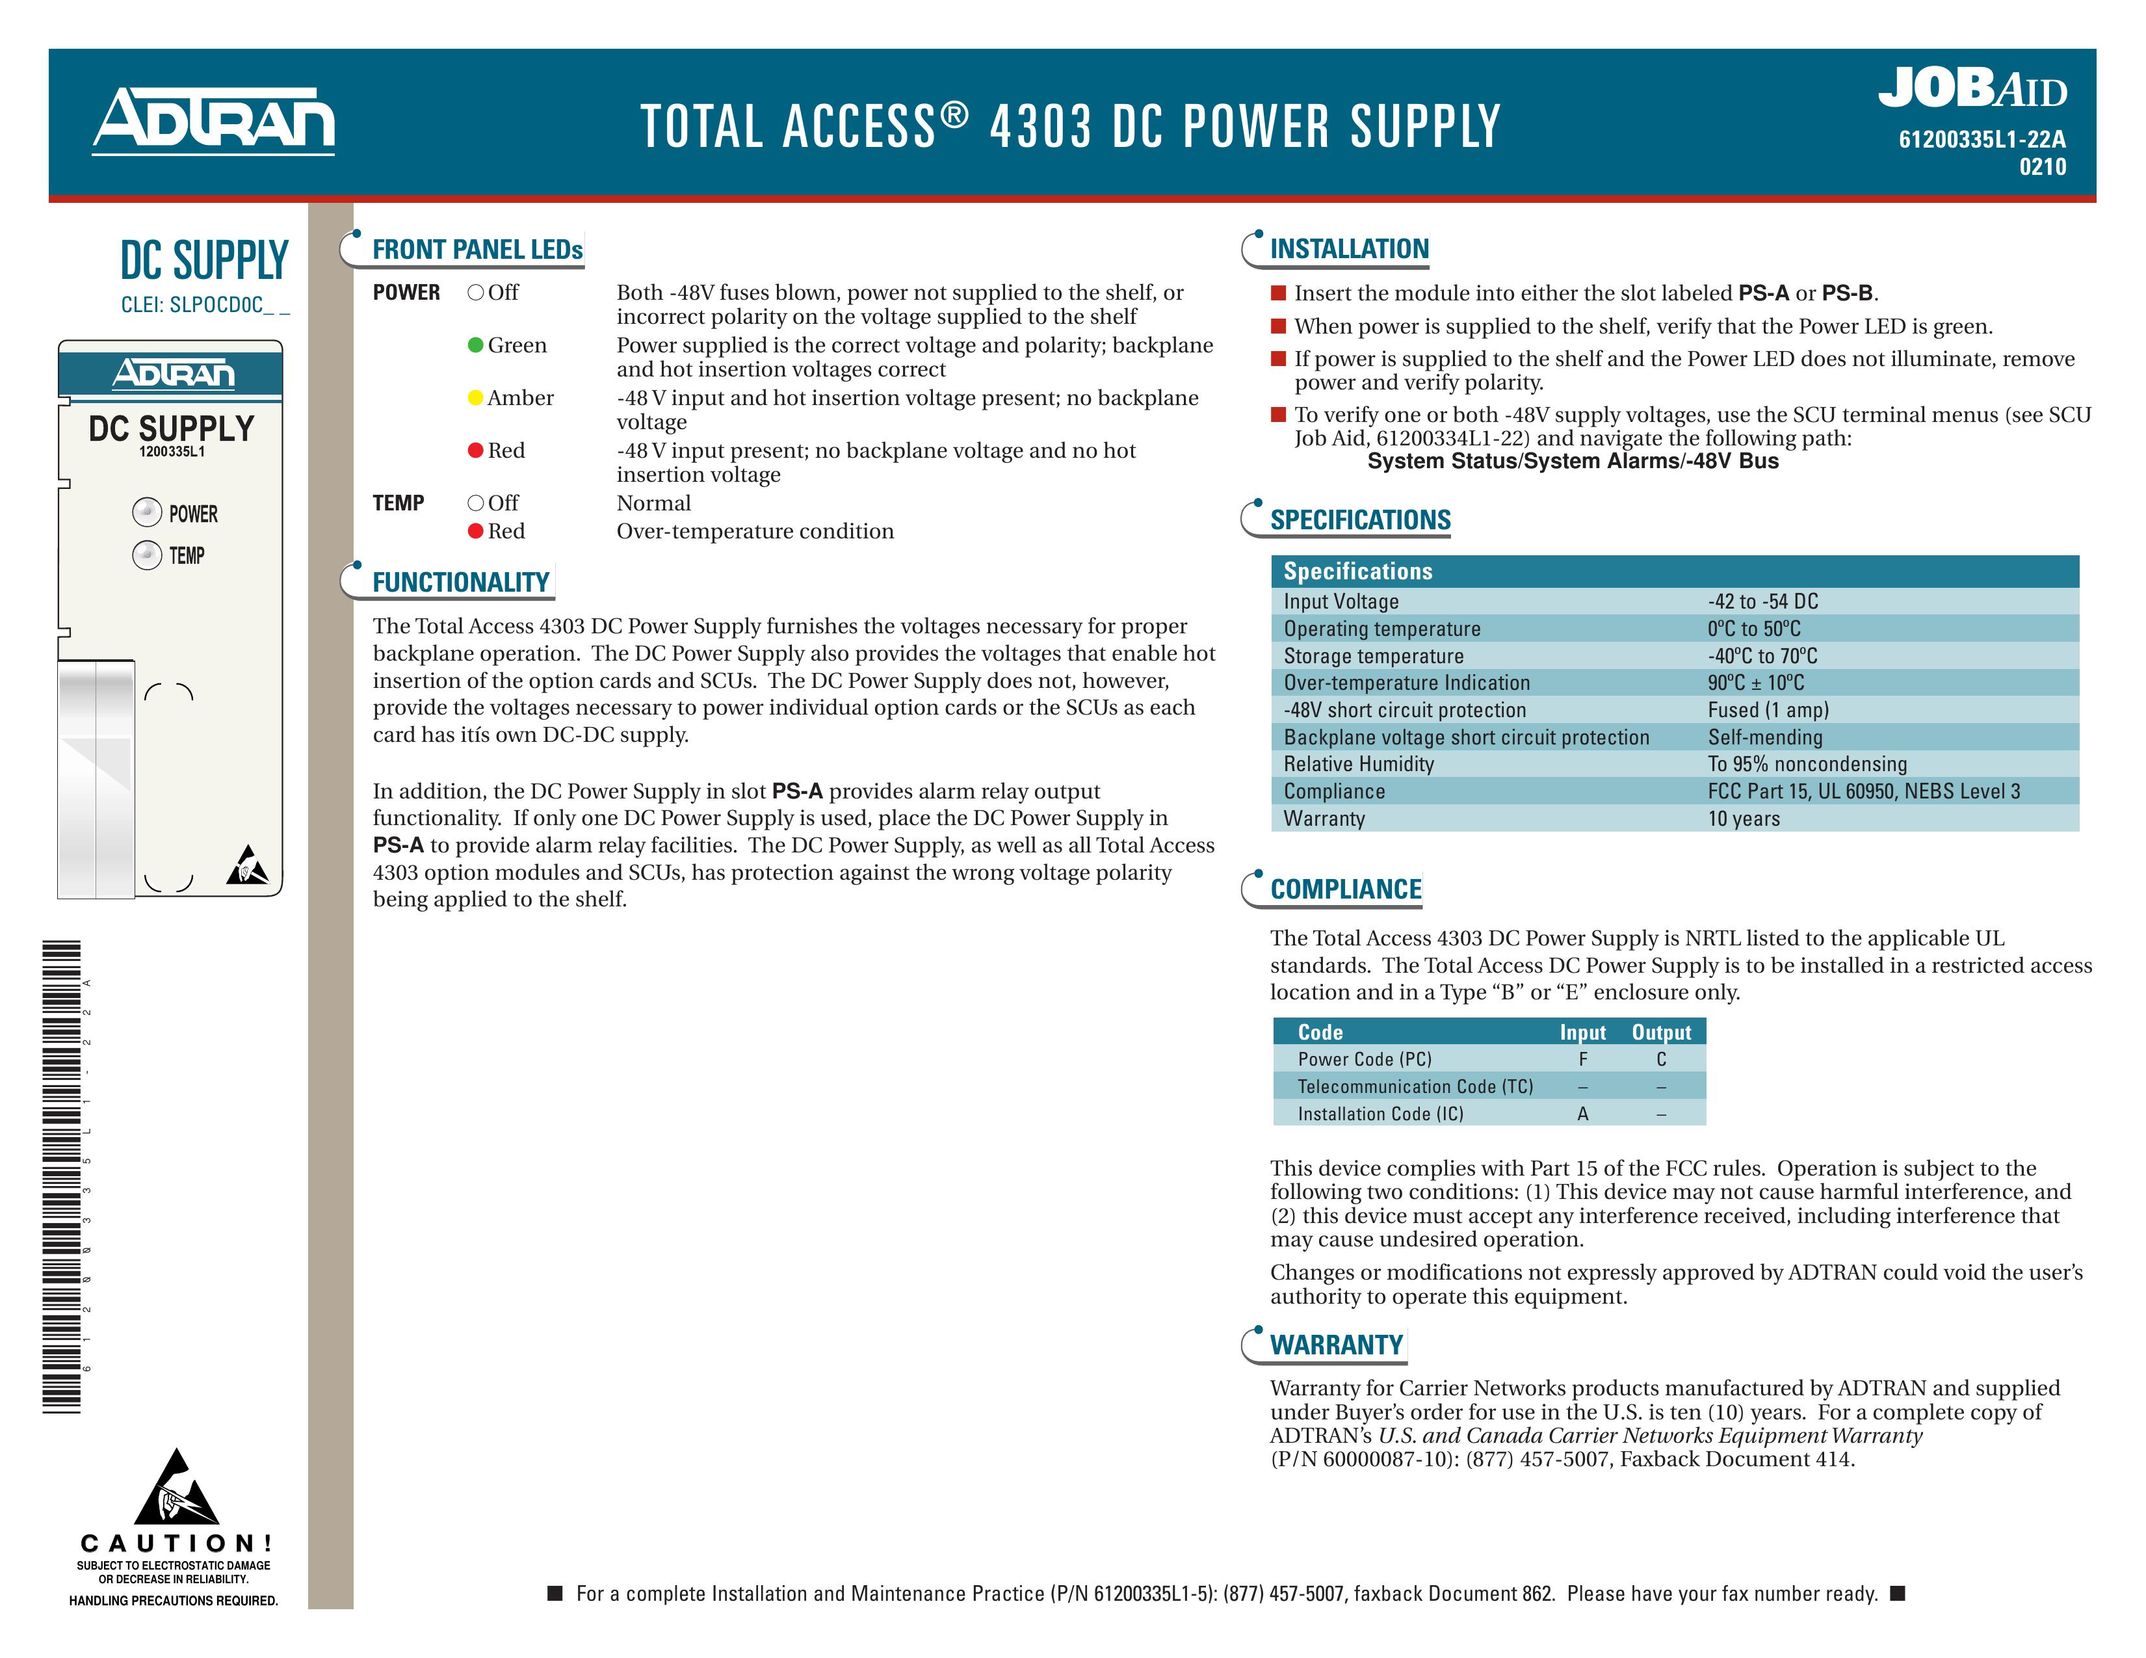 ADTRAN 4303 DC Power Supply User Manual